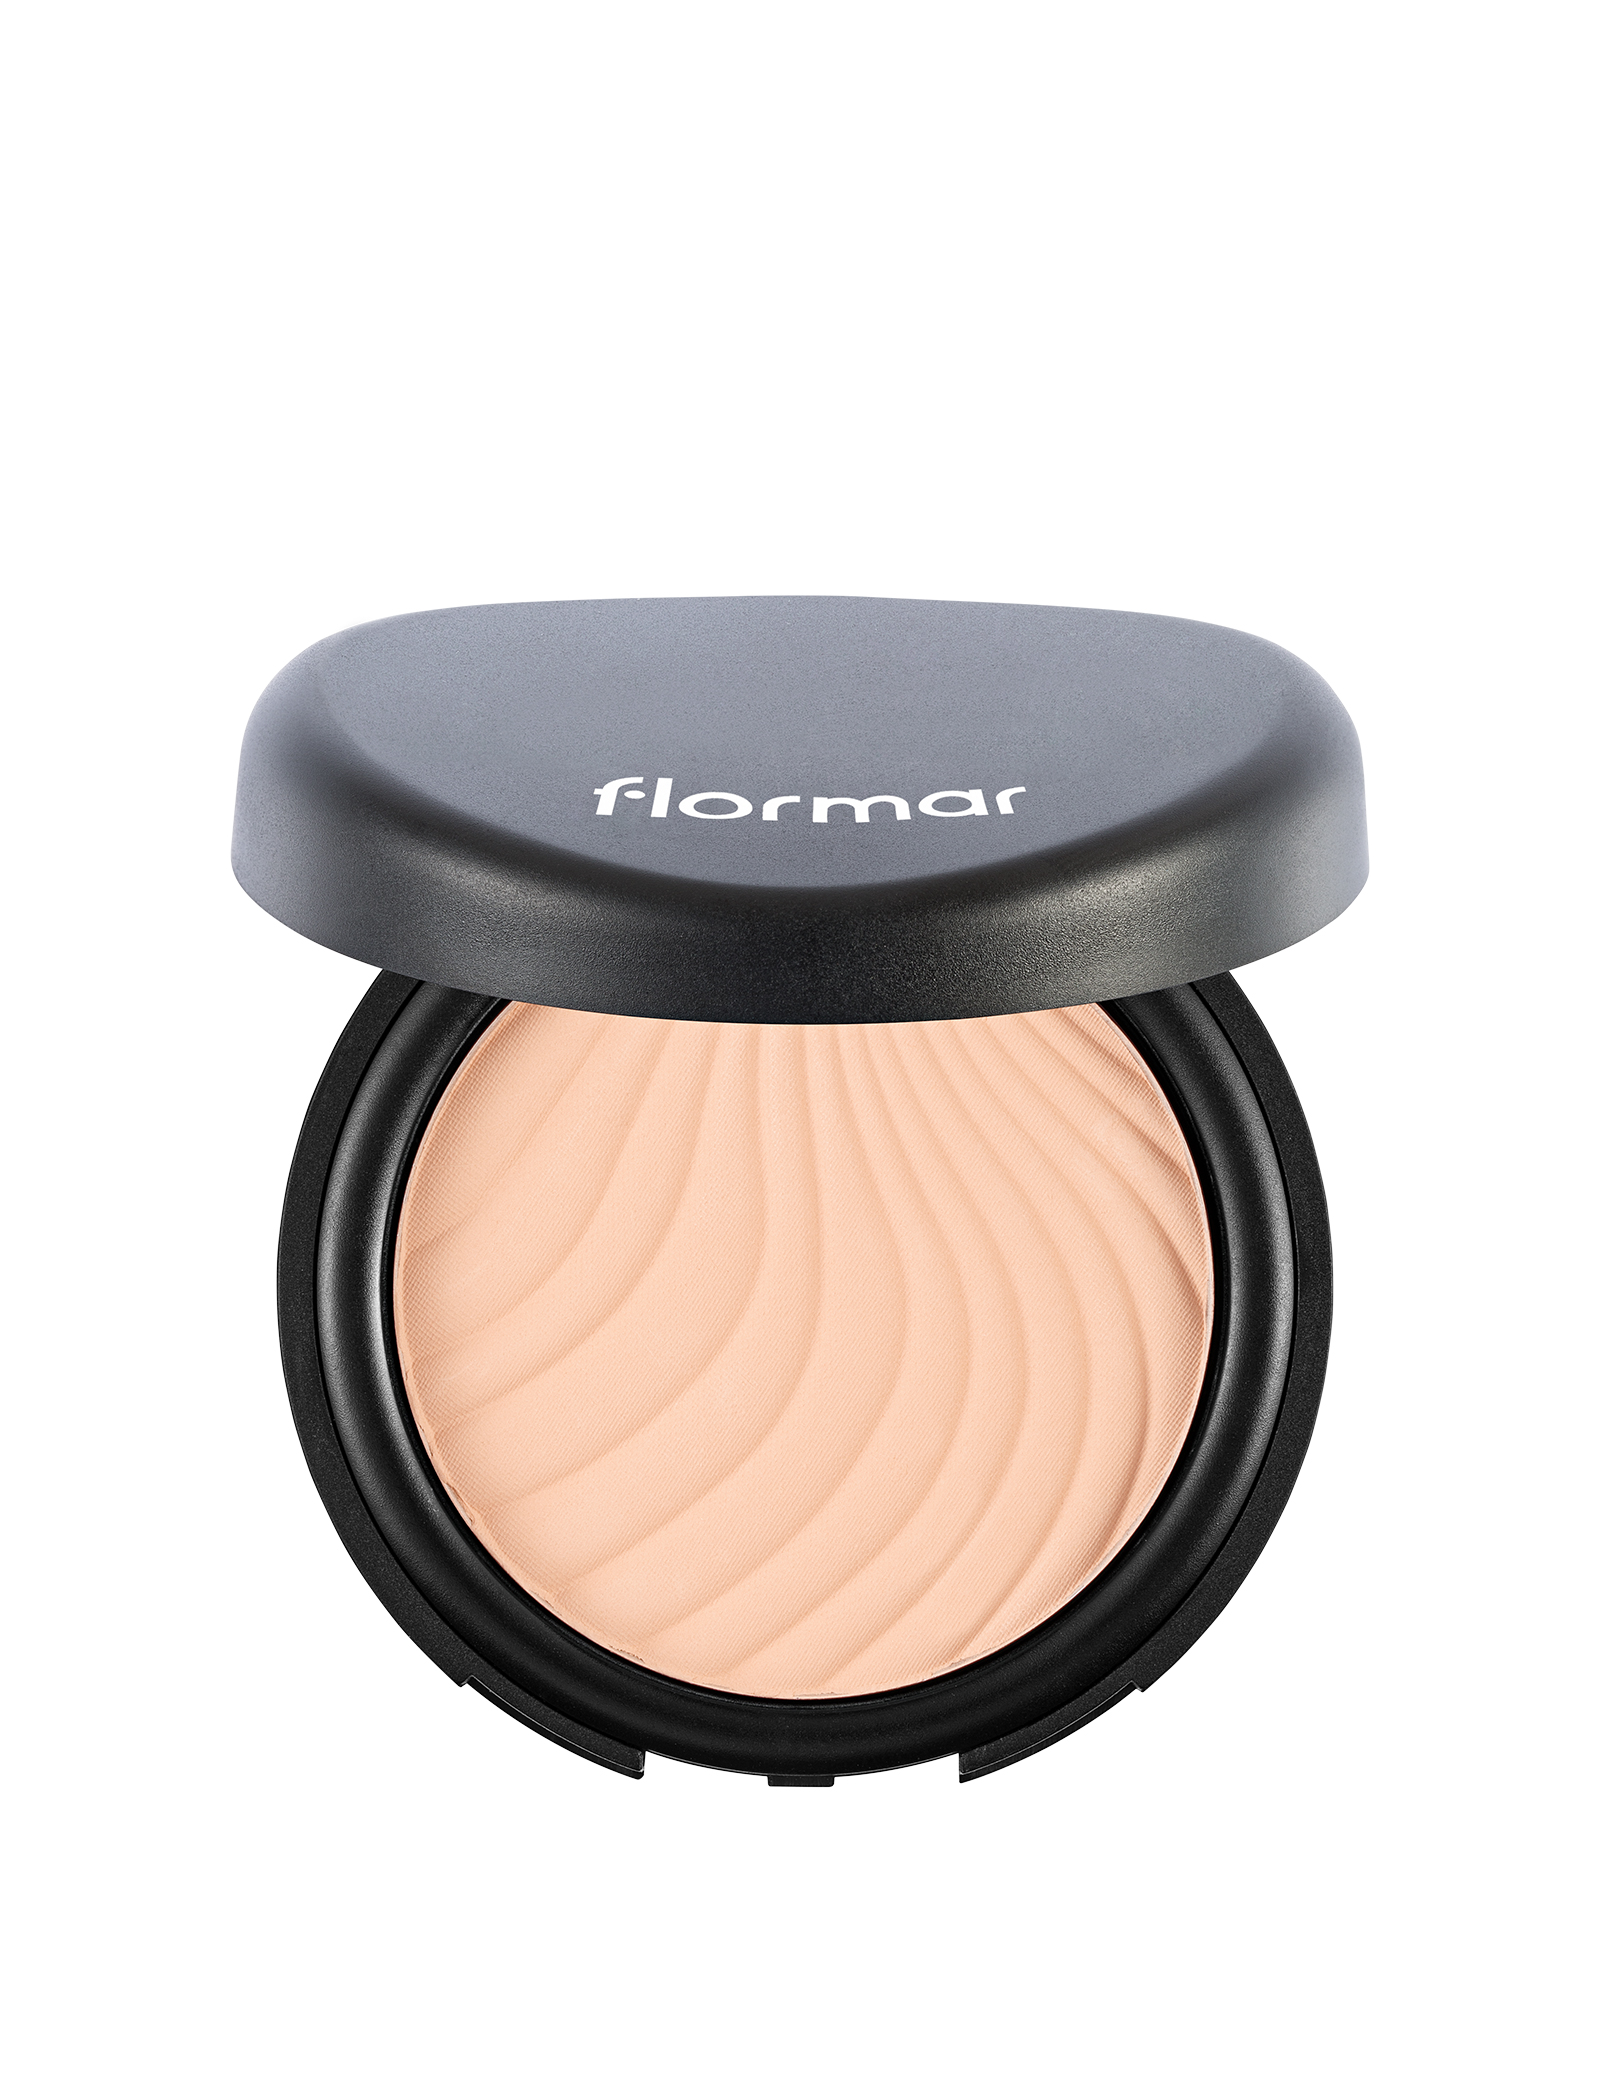 Flormar Compact Powder 098 Medium Natural Beige